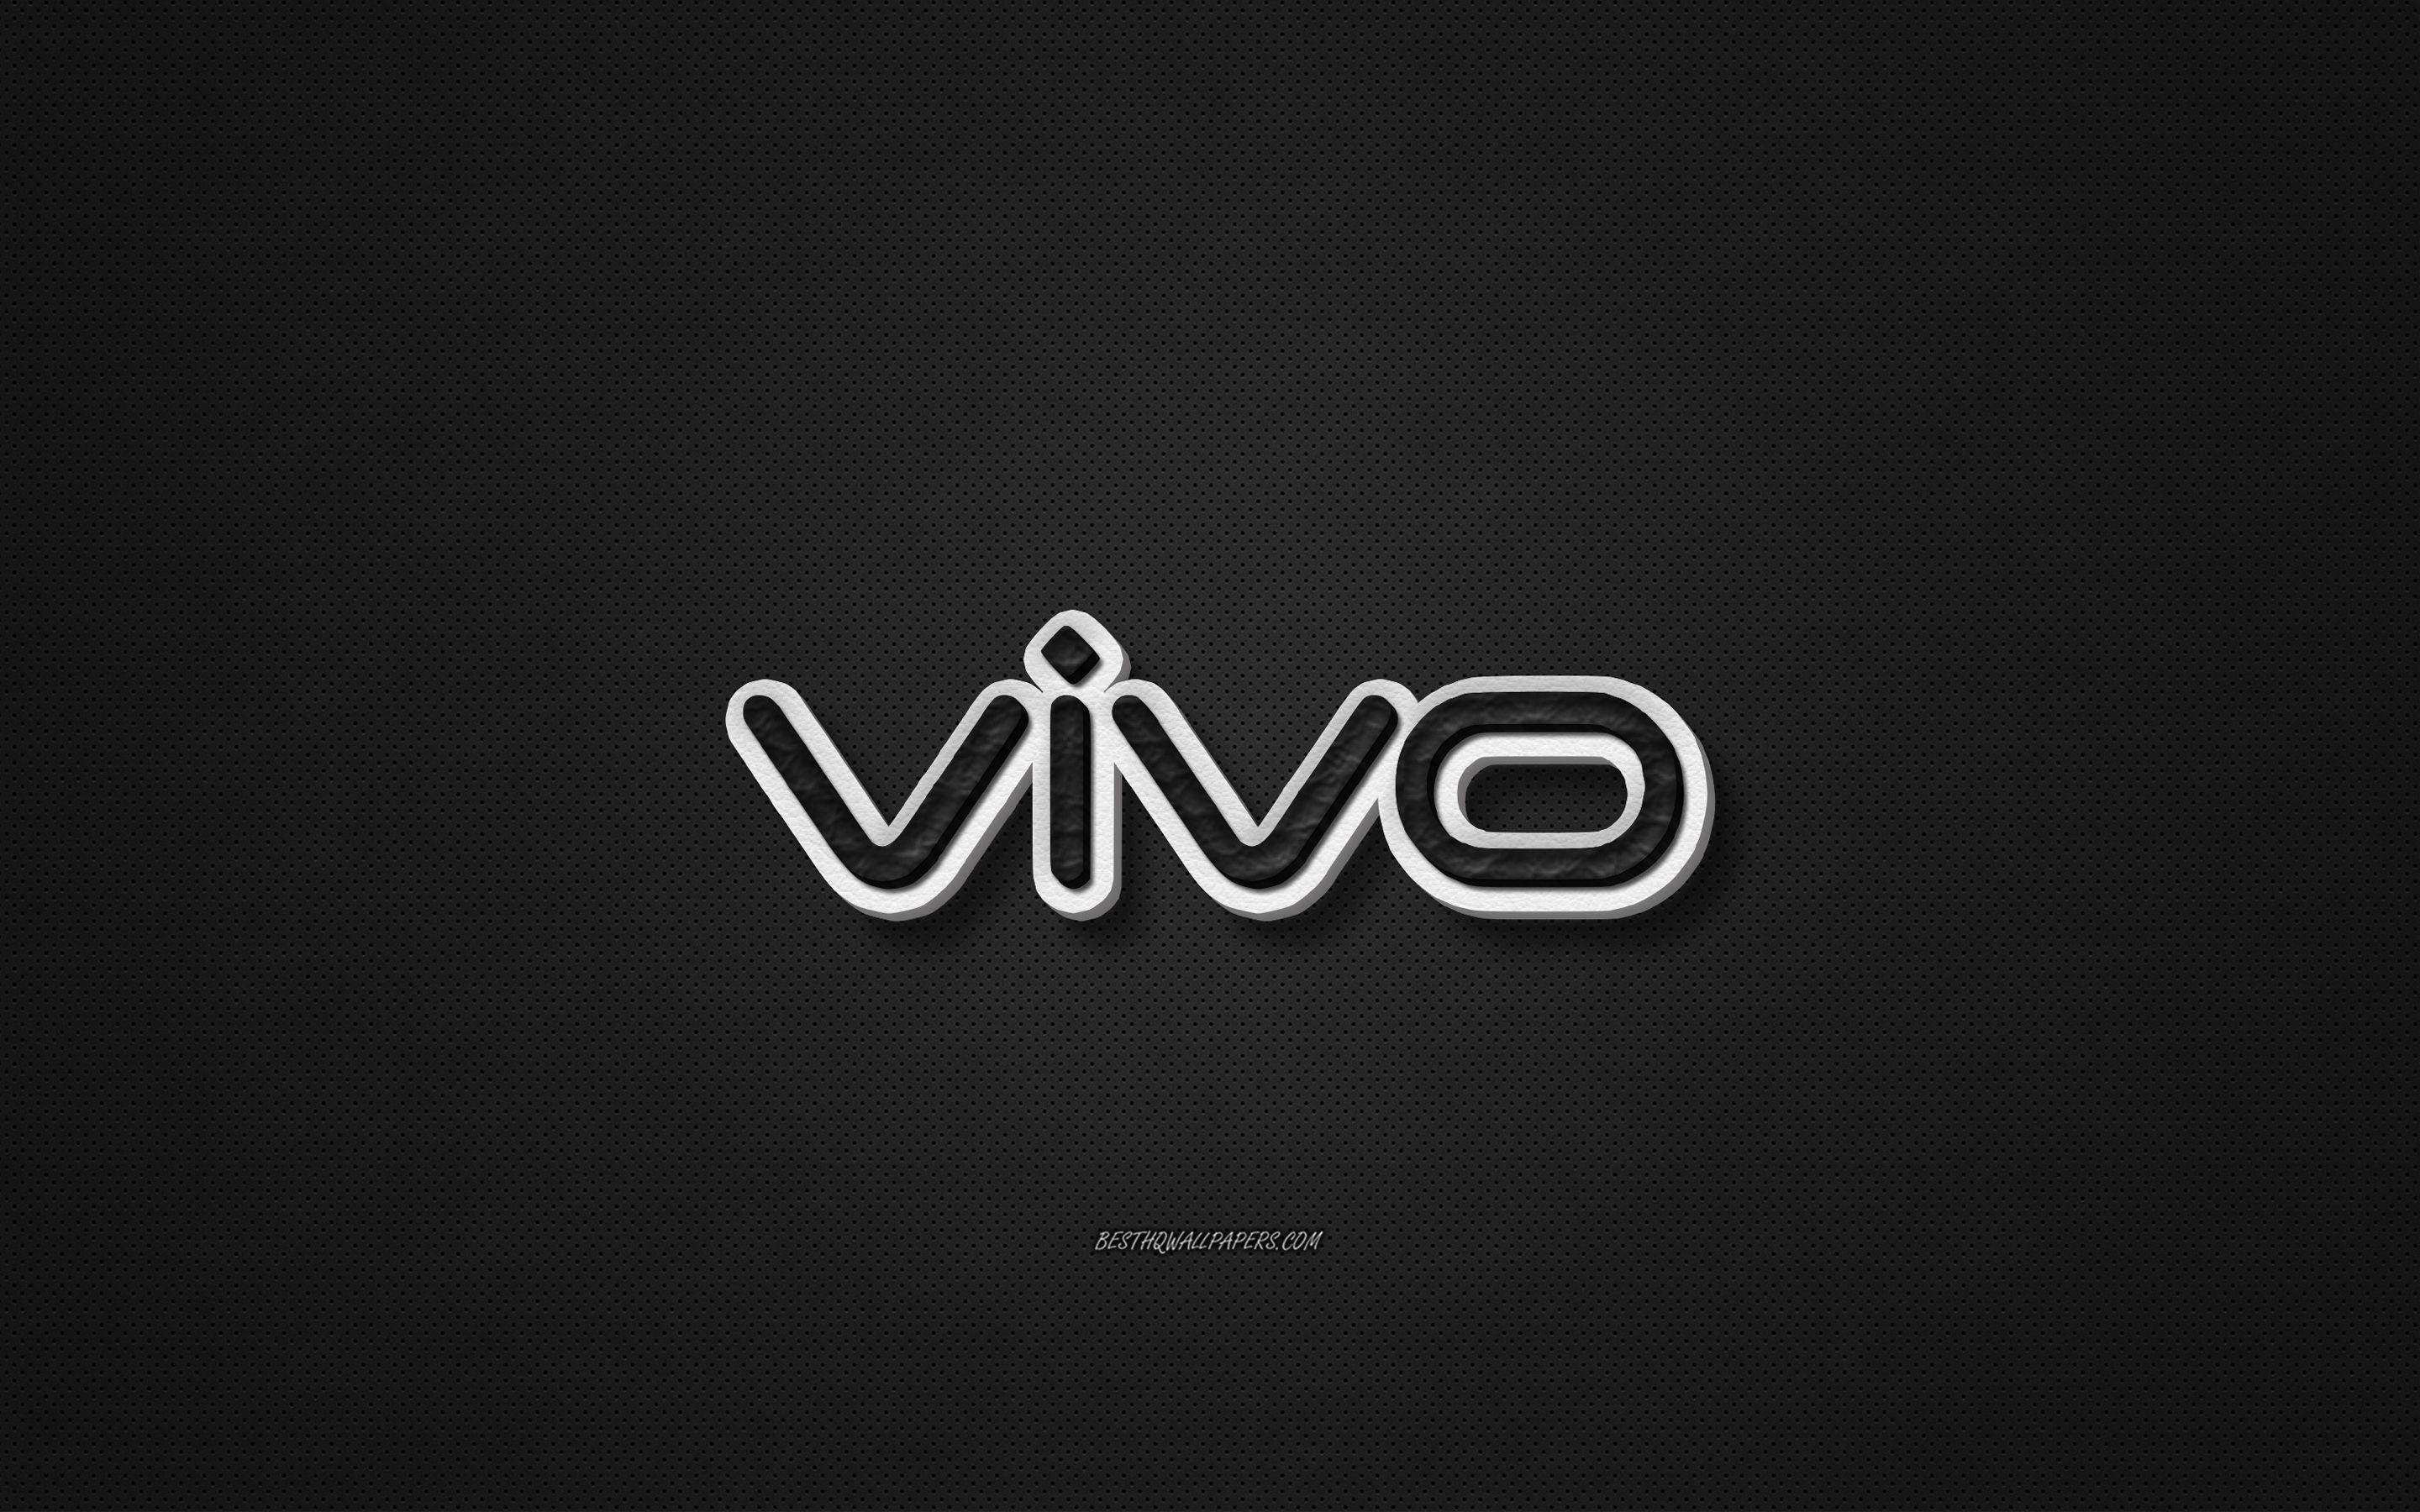 100+] Vivo Logo Wallpapers | Wallpapers.com